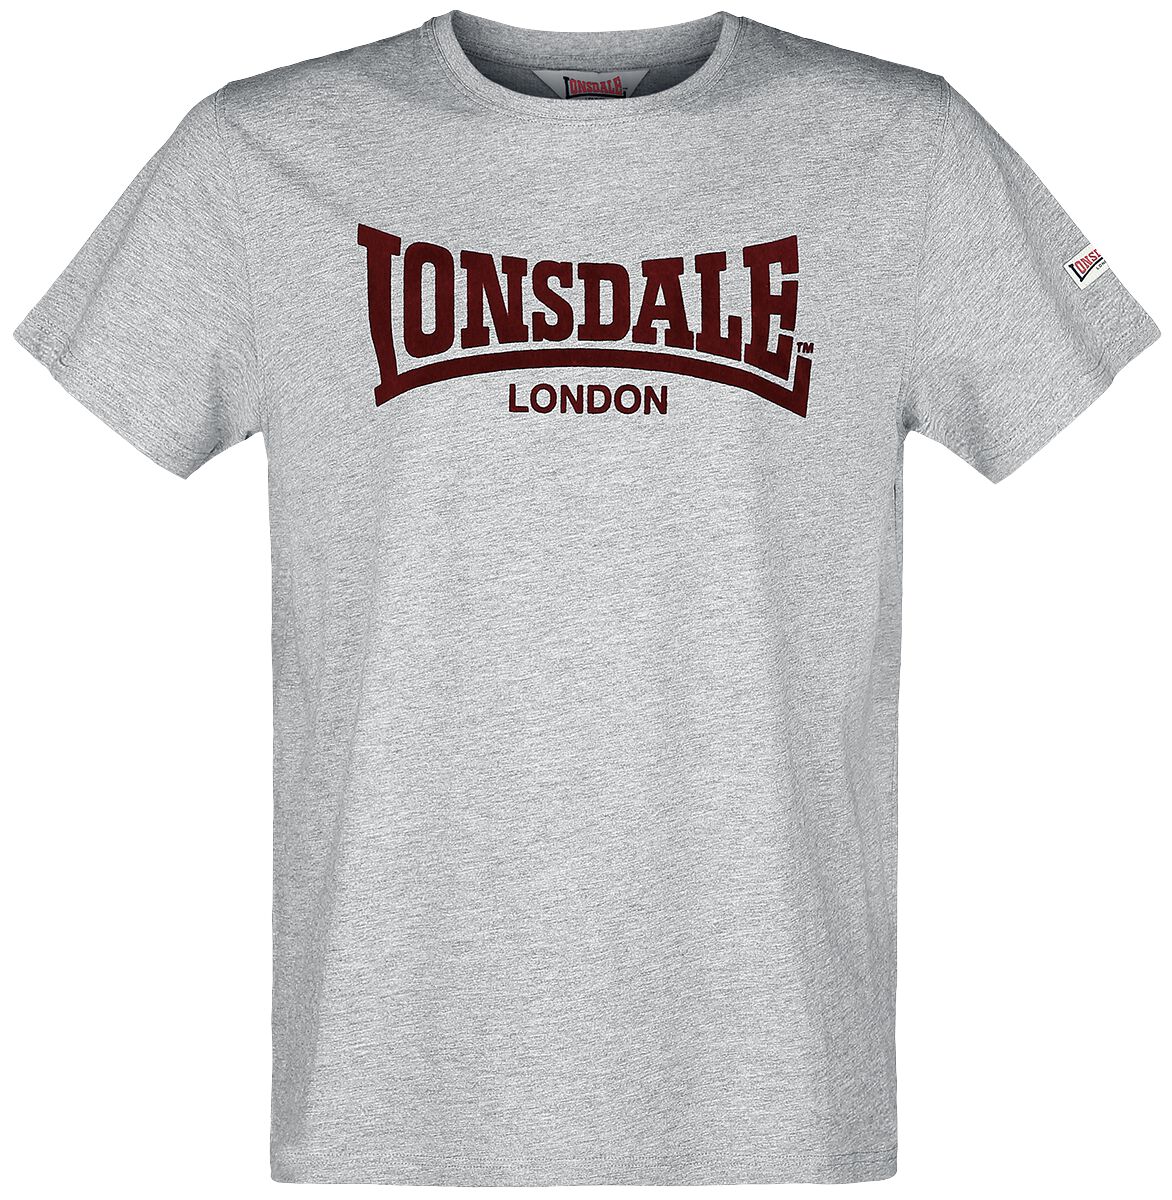 Lonsdale London LL008 One Tone T-Shirt grey